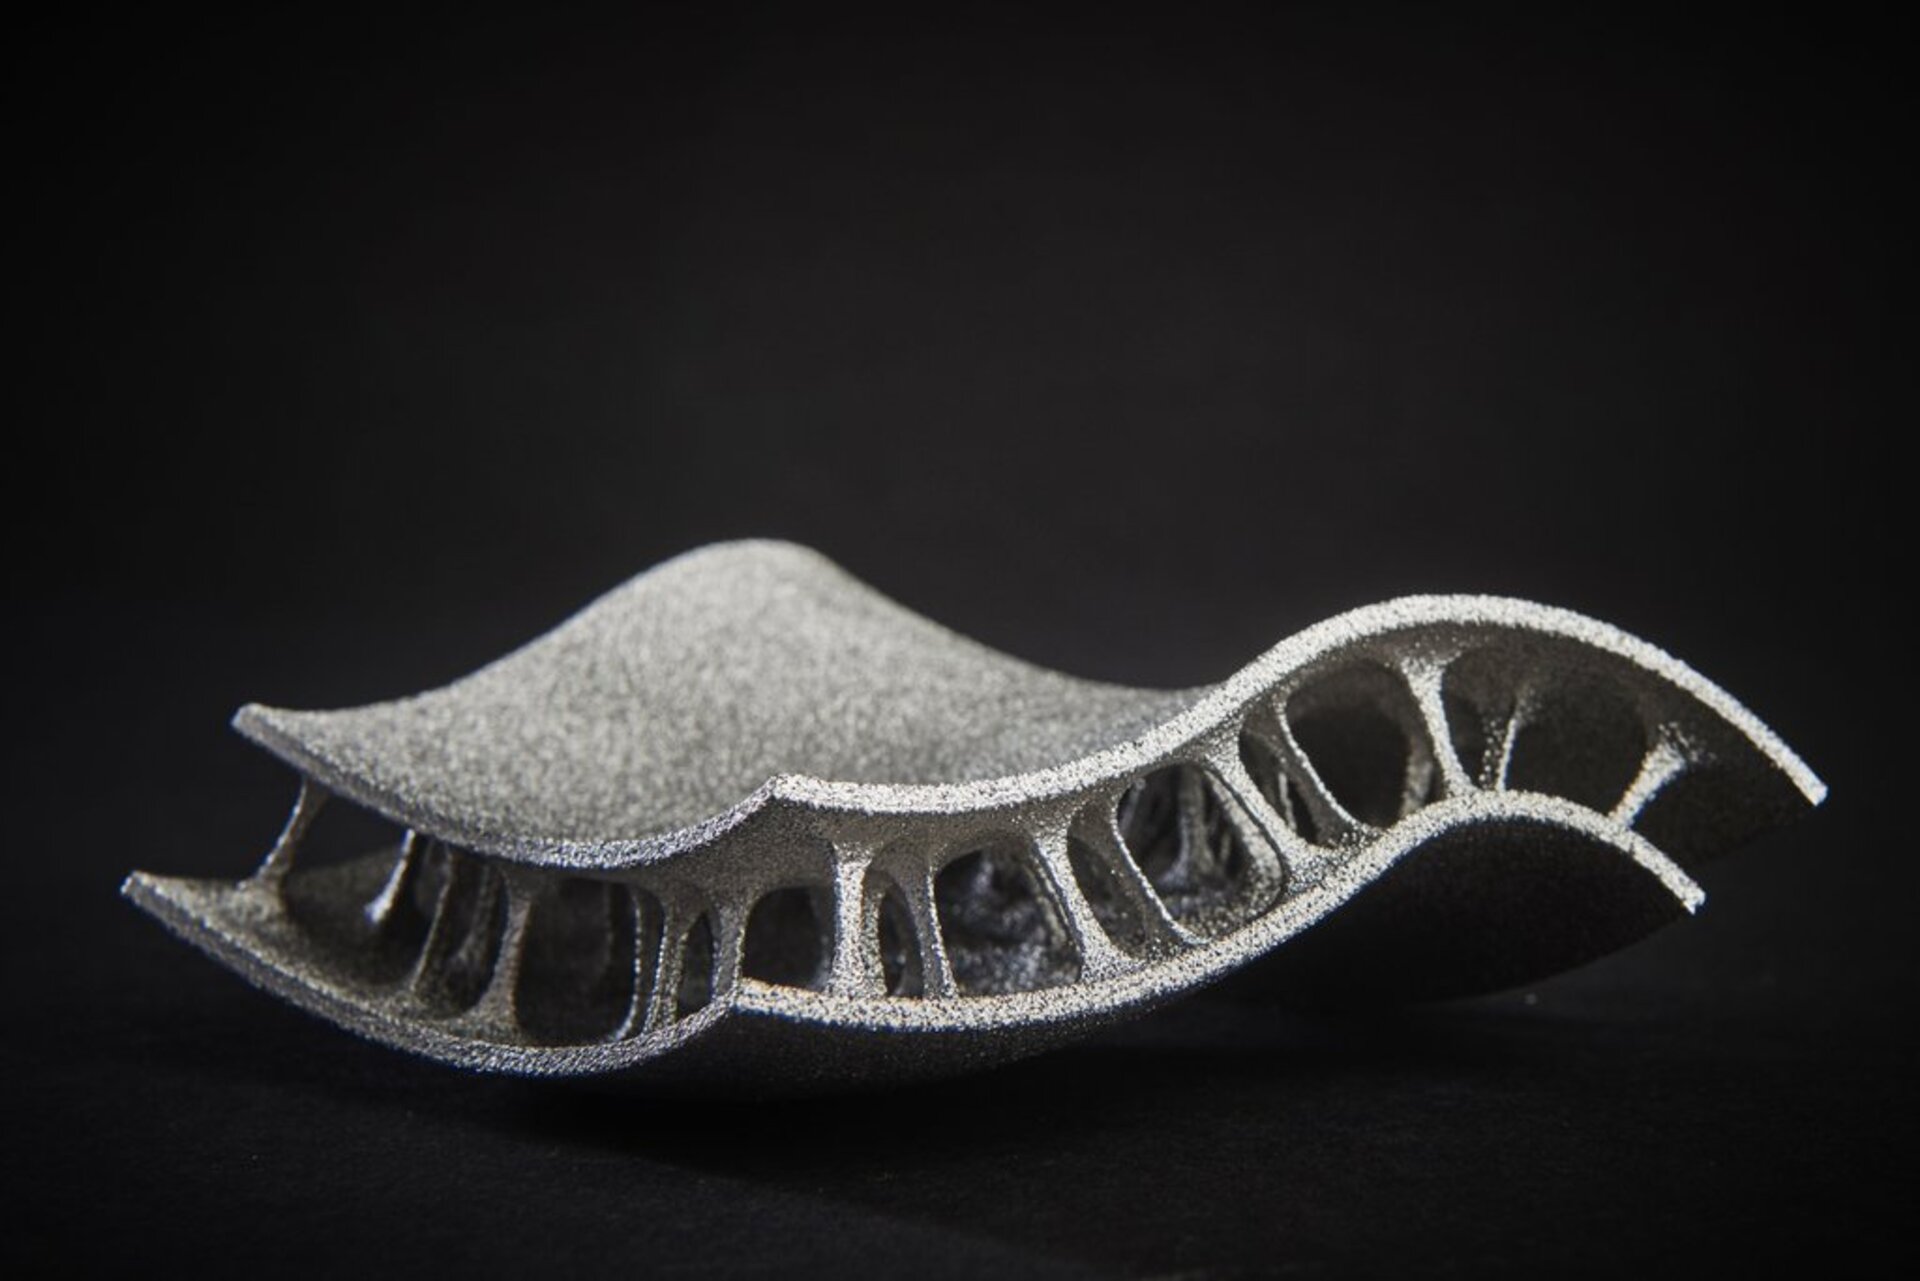 Metal 3D printed part